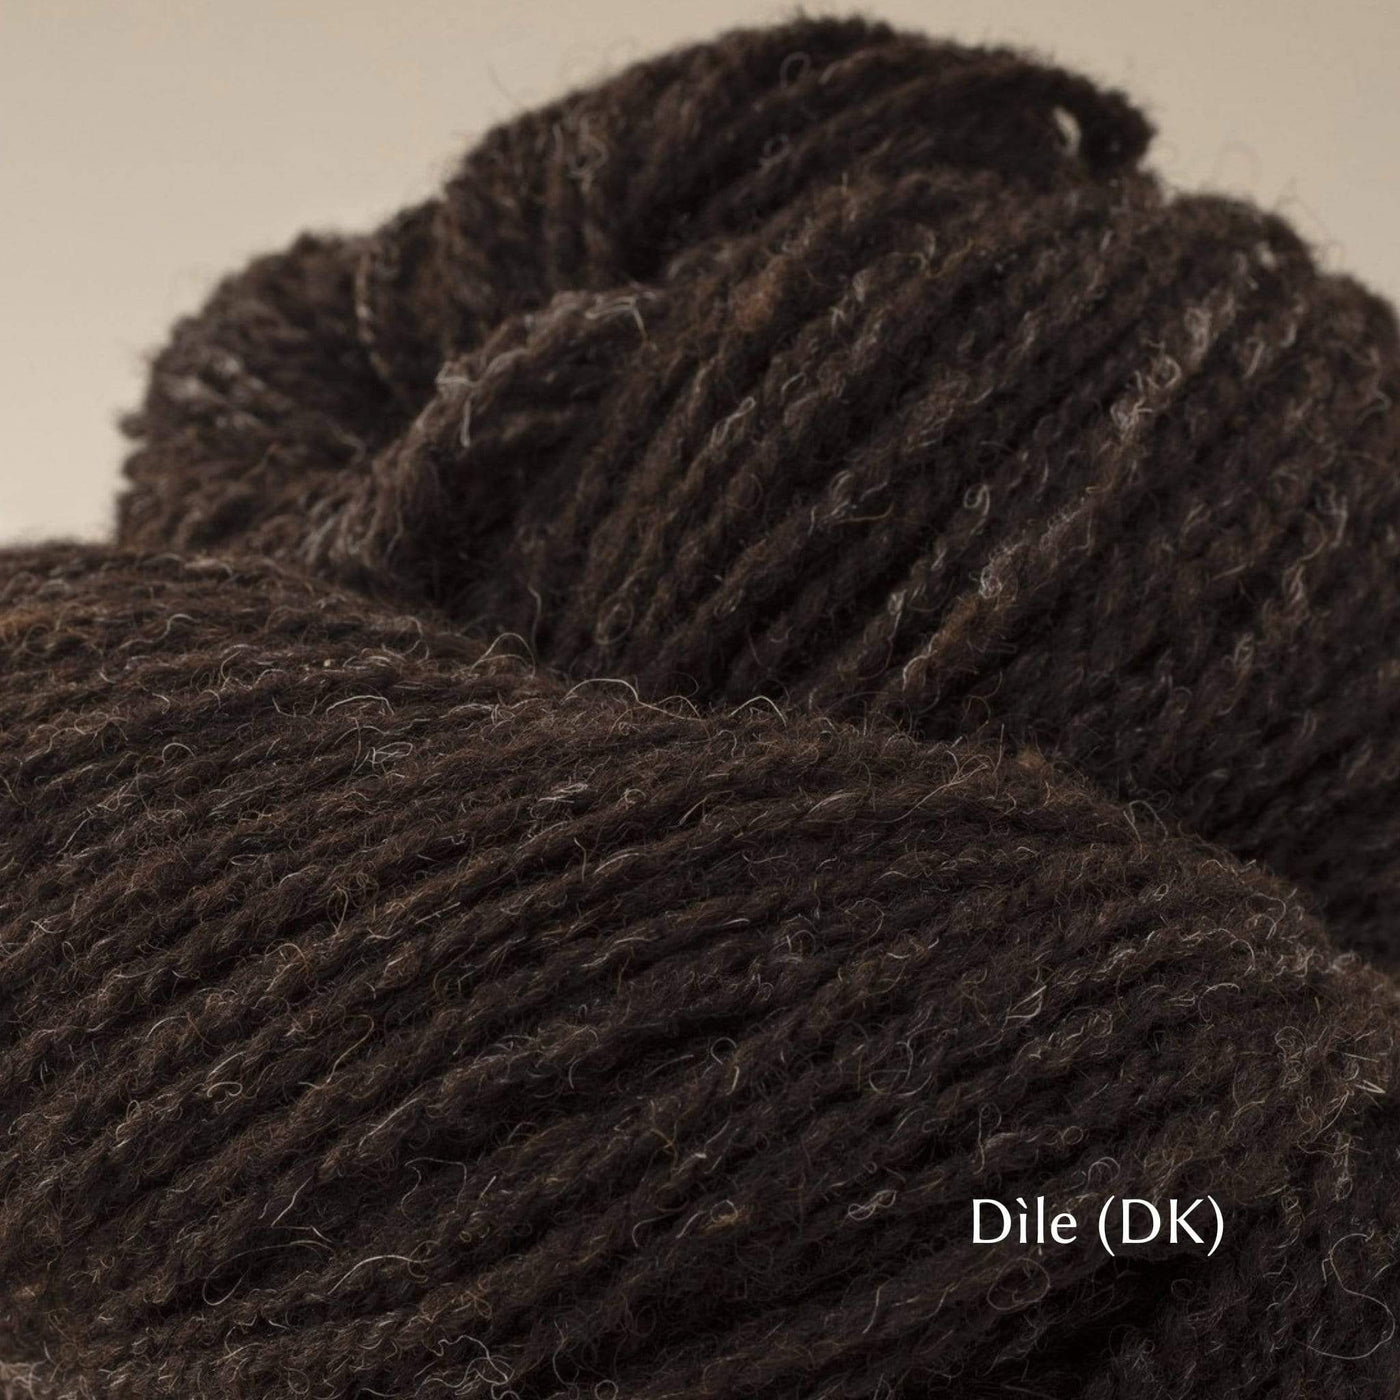 The Woolly Thistle Uist Wool DK yarn in Dile (black)